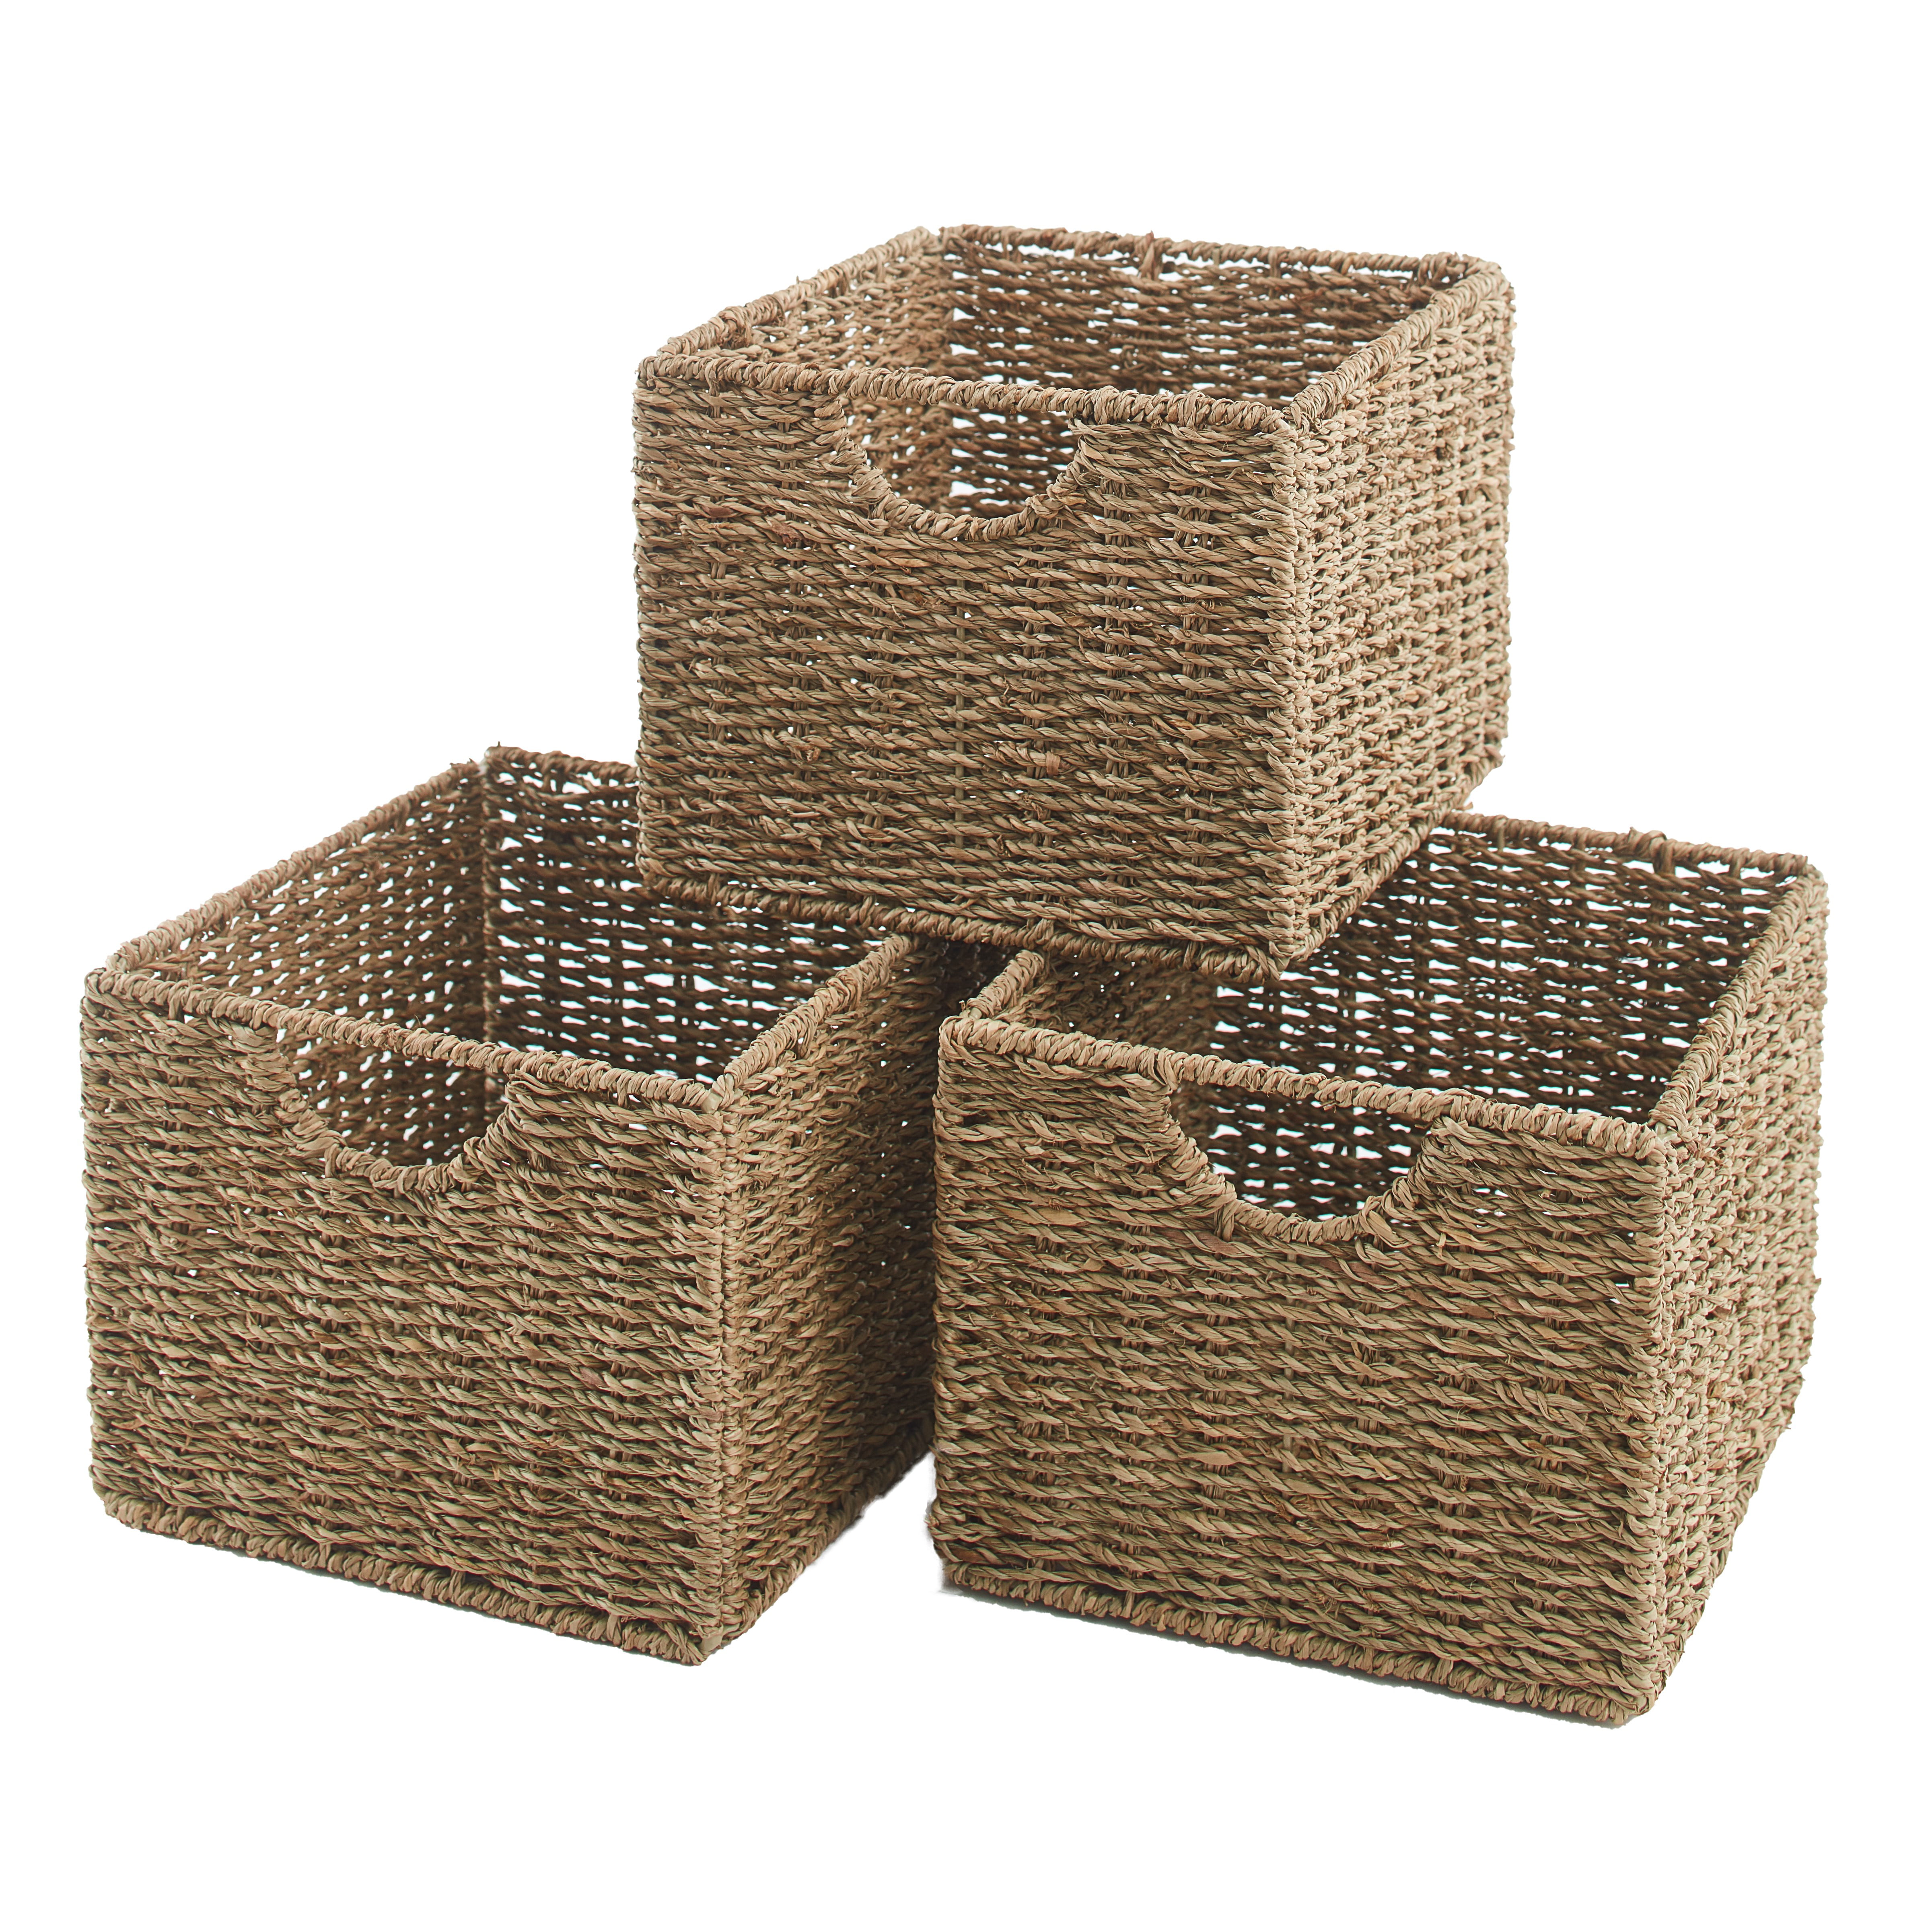 6PCs Home Black Storage Bins Baskets Household Organizer Fabric Cube Box Contain 